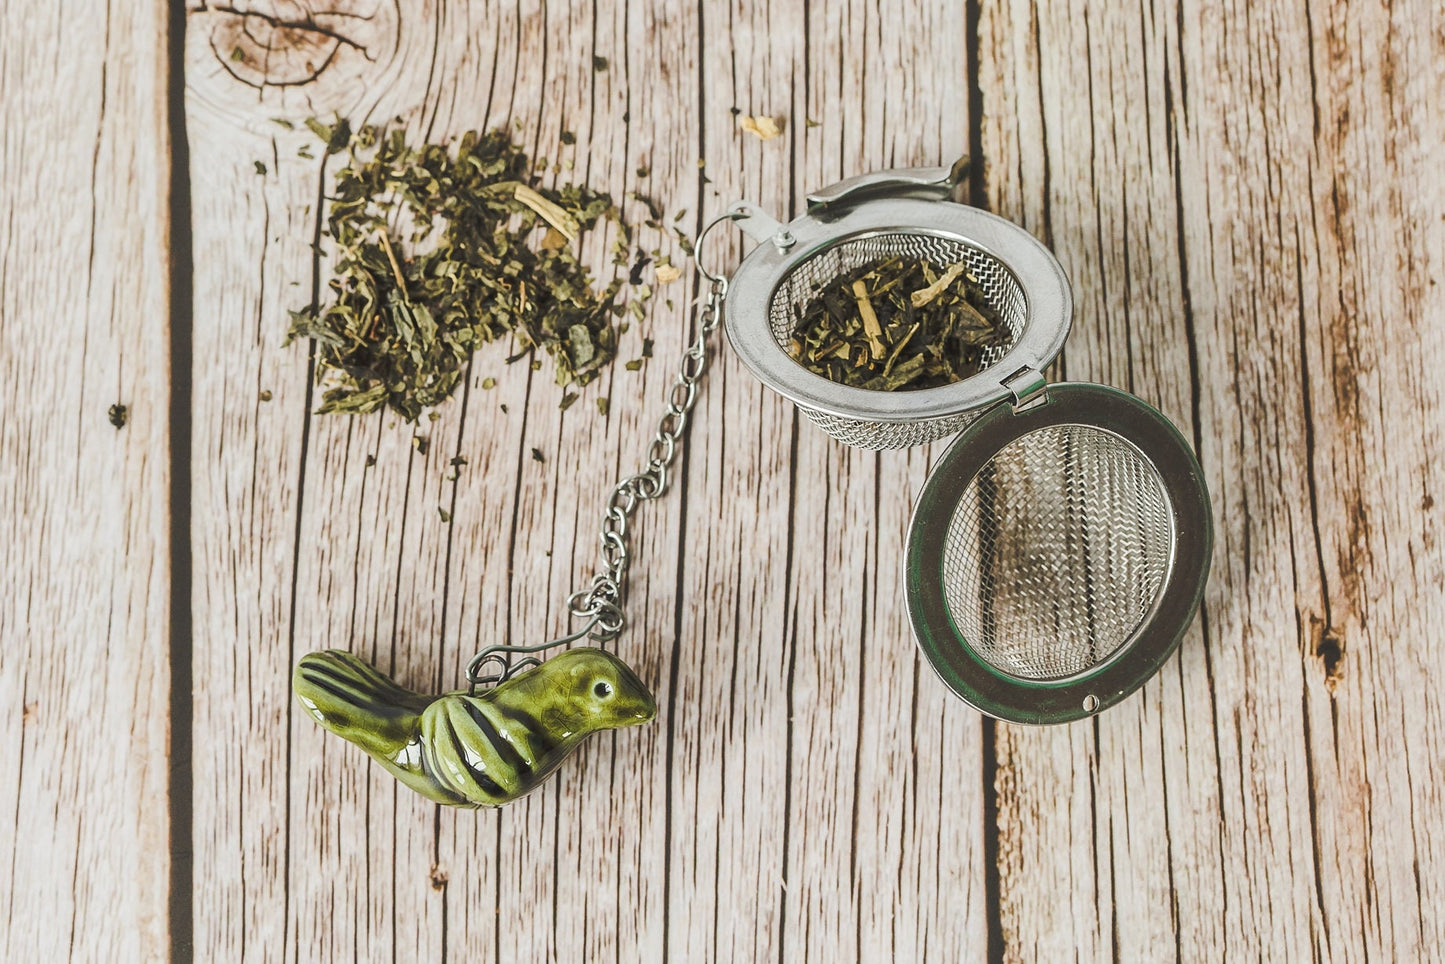 Tea infuser with green bird - Loose leaf tea strainer - Tea steeper with ceramic charm - Tea lover gift